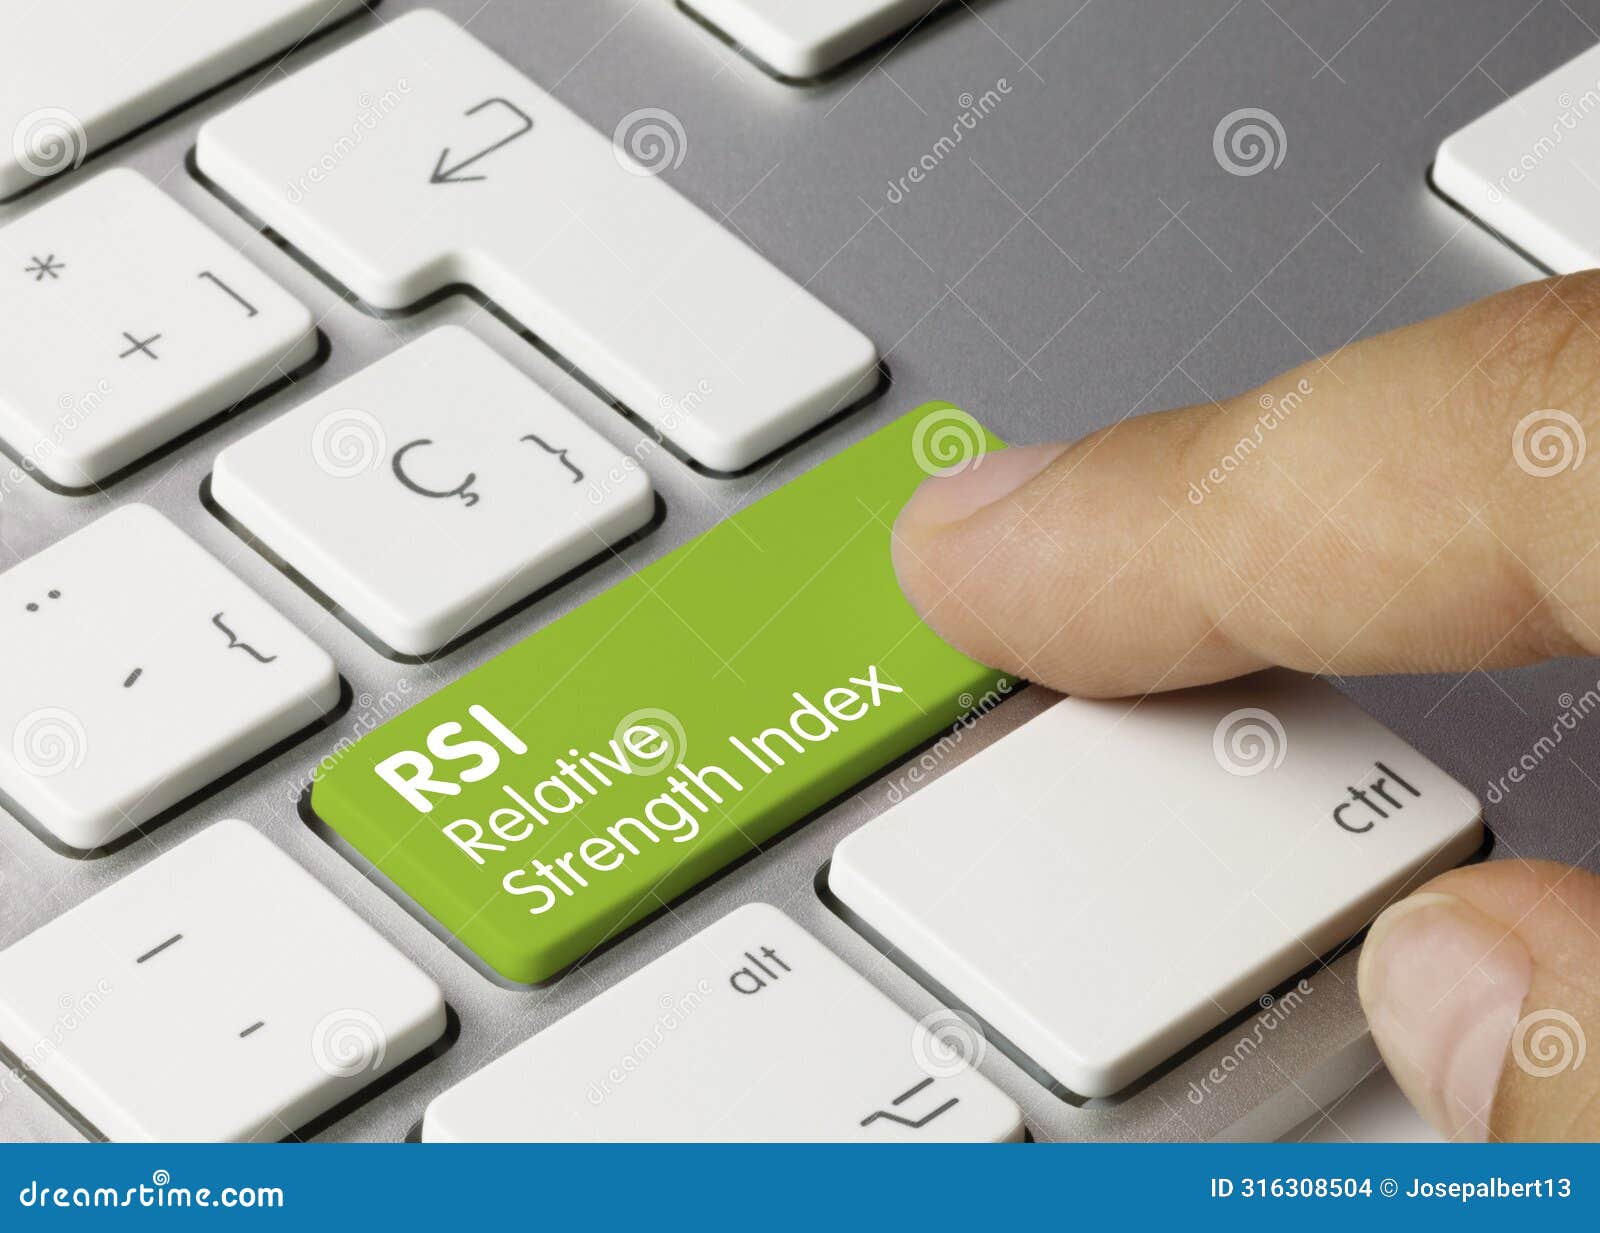 rsi relative strength index - inscription on green keyboard key